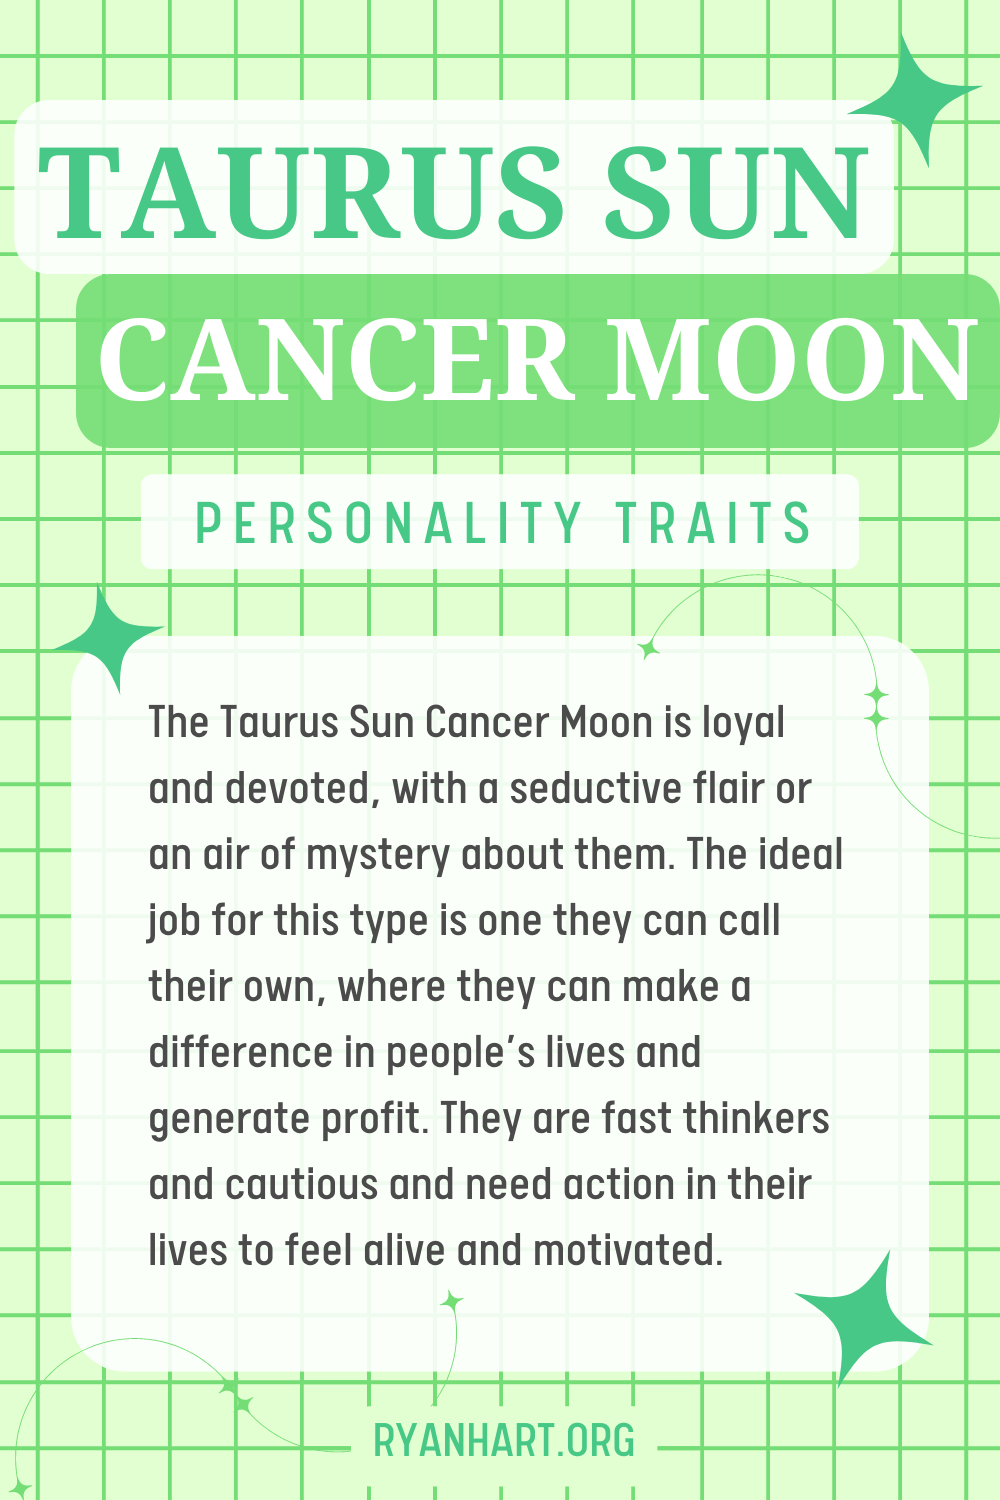 Taurus Sun Cancer Moon Description